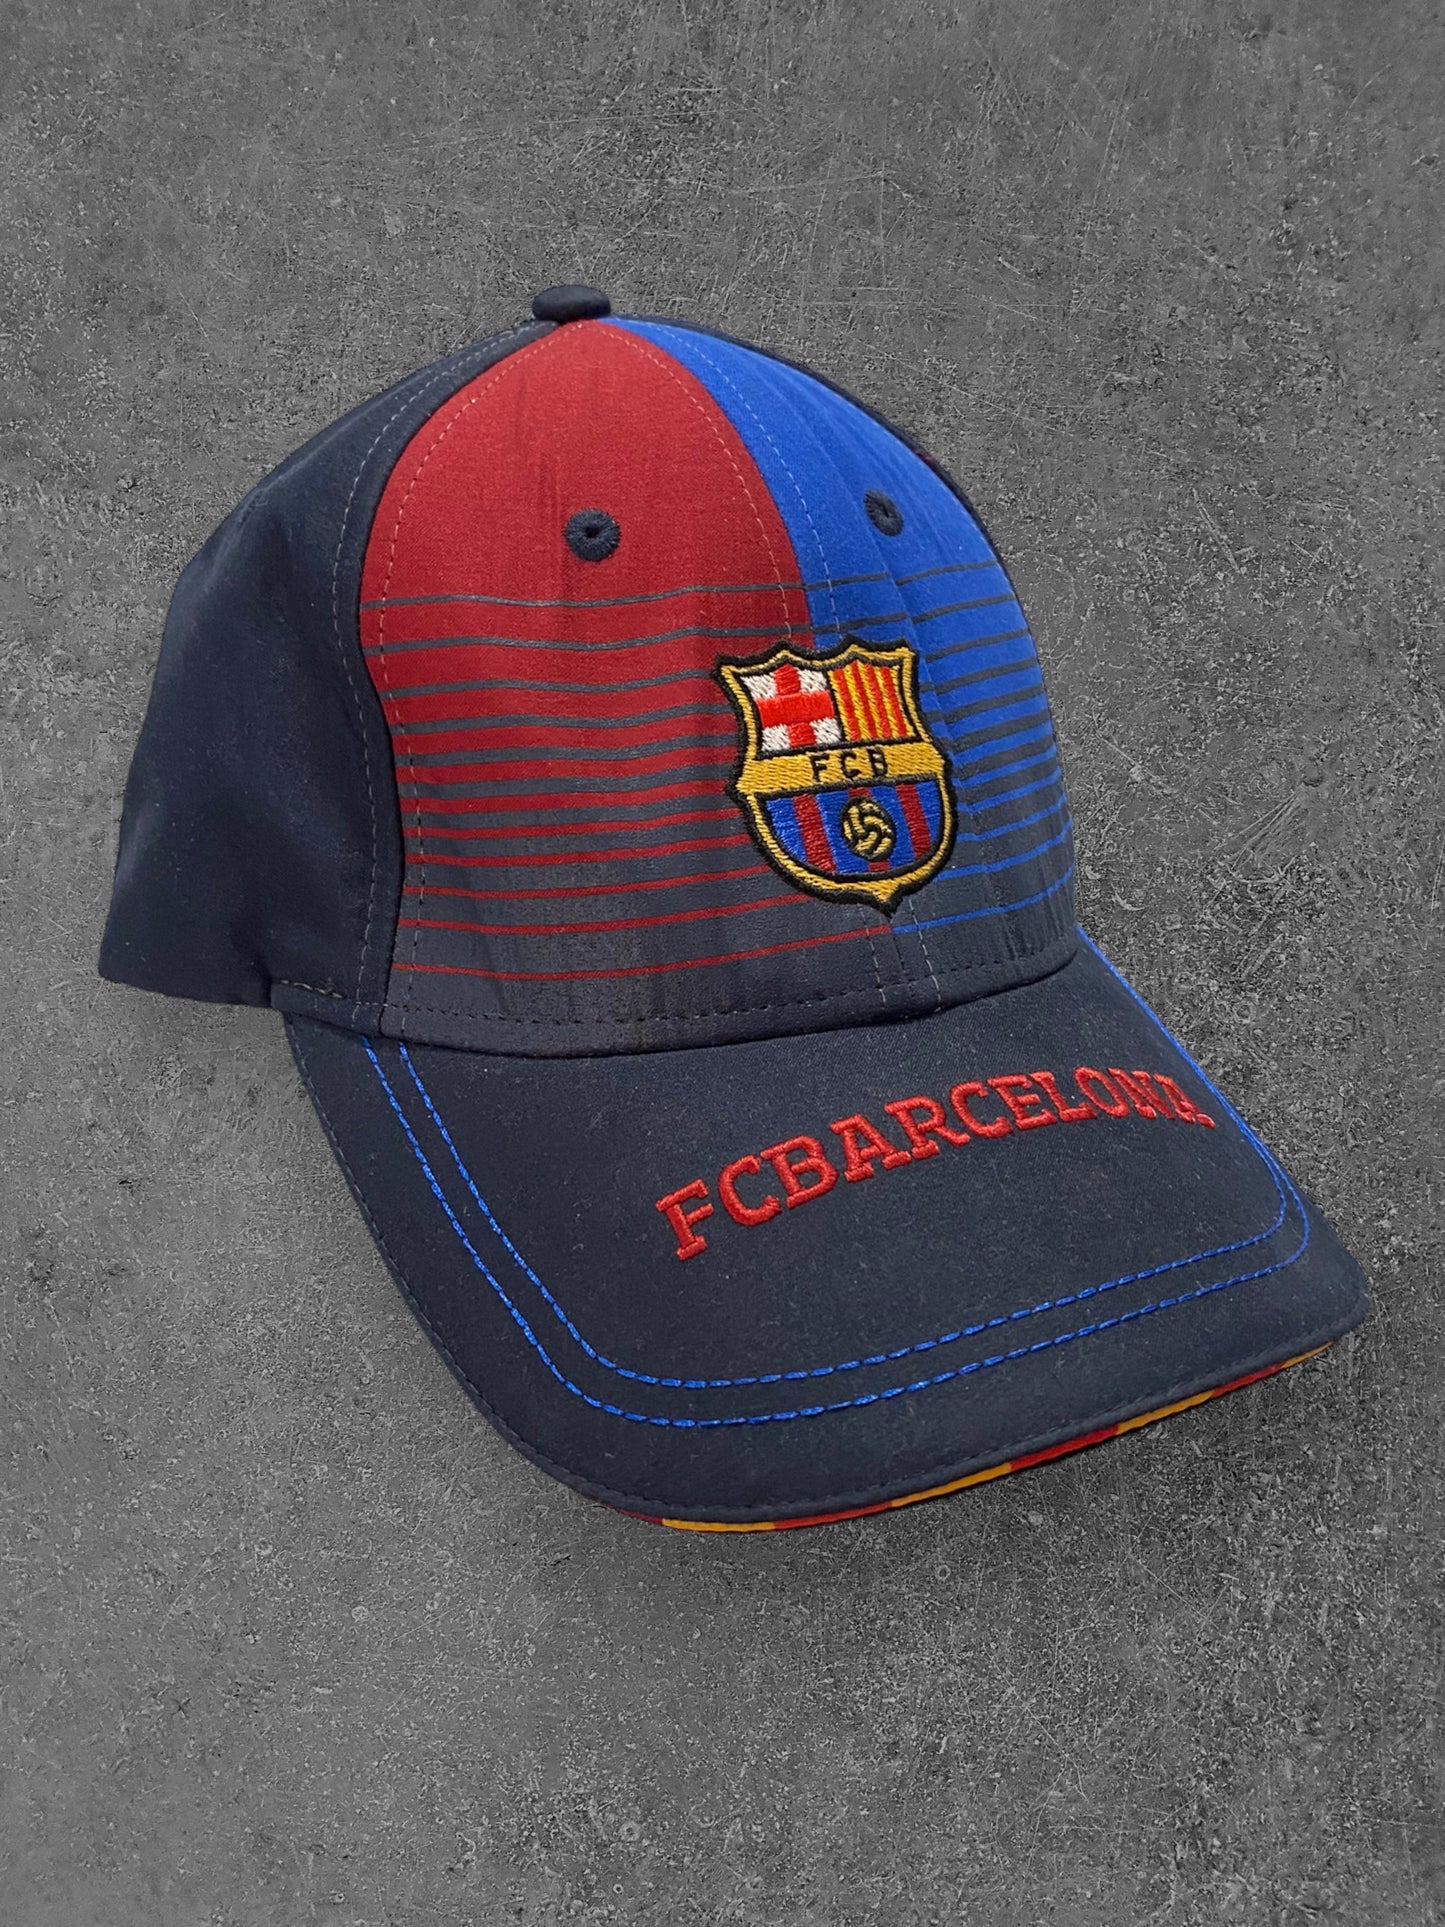 FC Barcelona Lippis